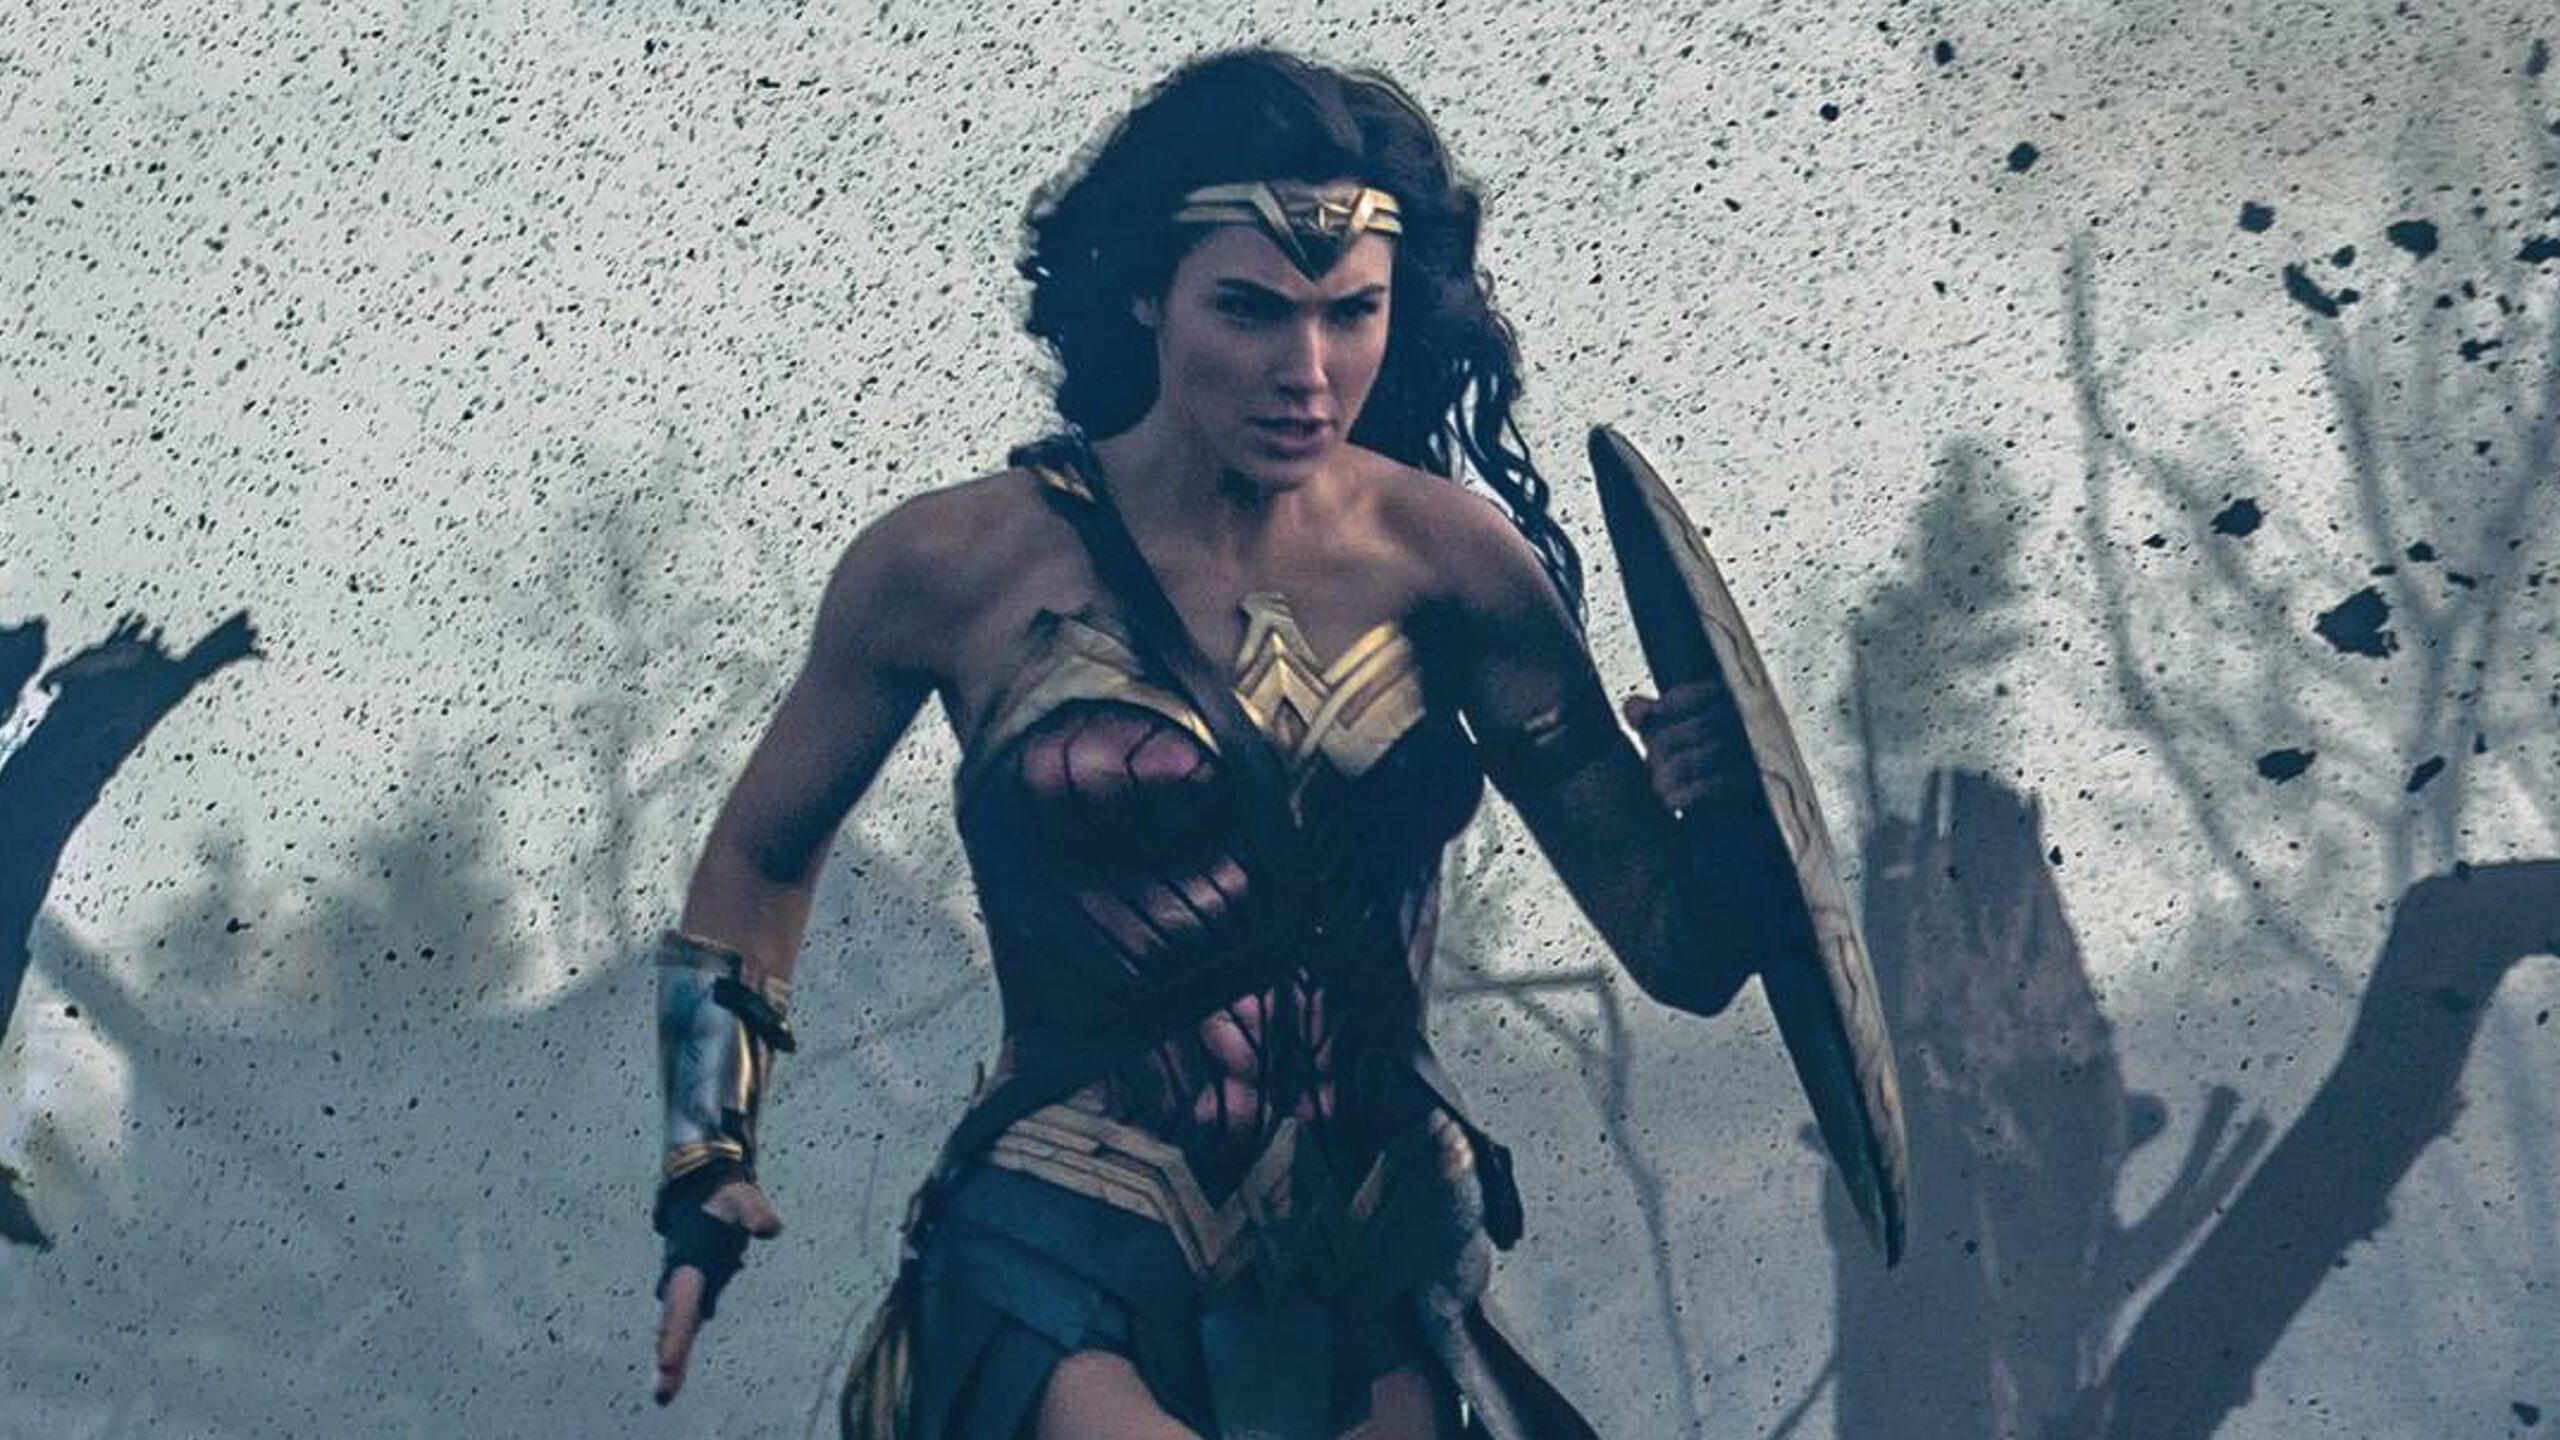 Marvel stars praise DC’s ‘Wonder Woman’